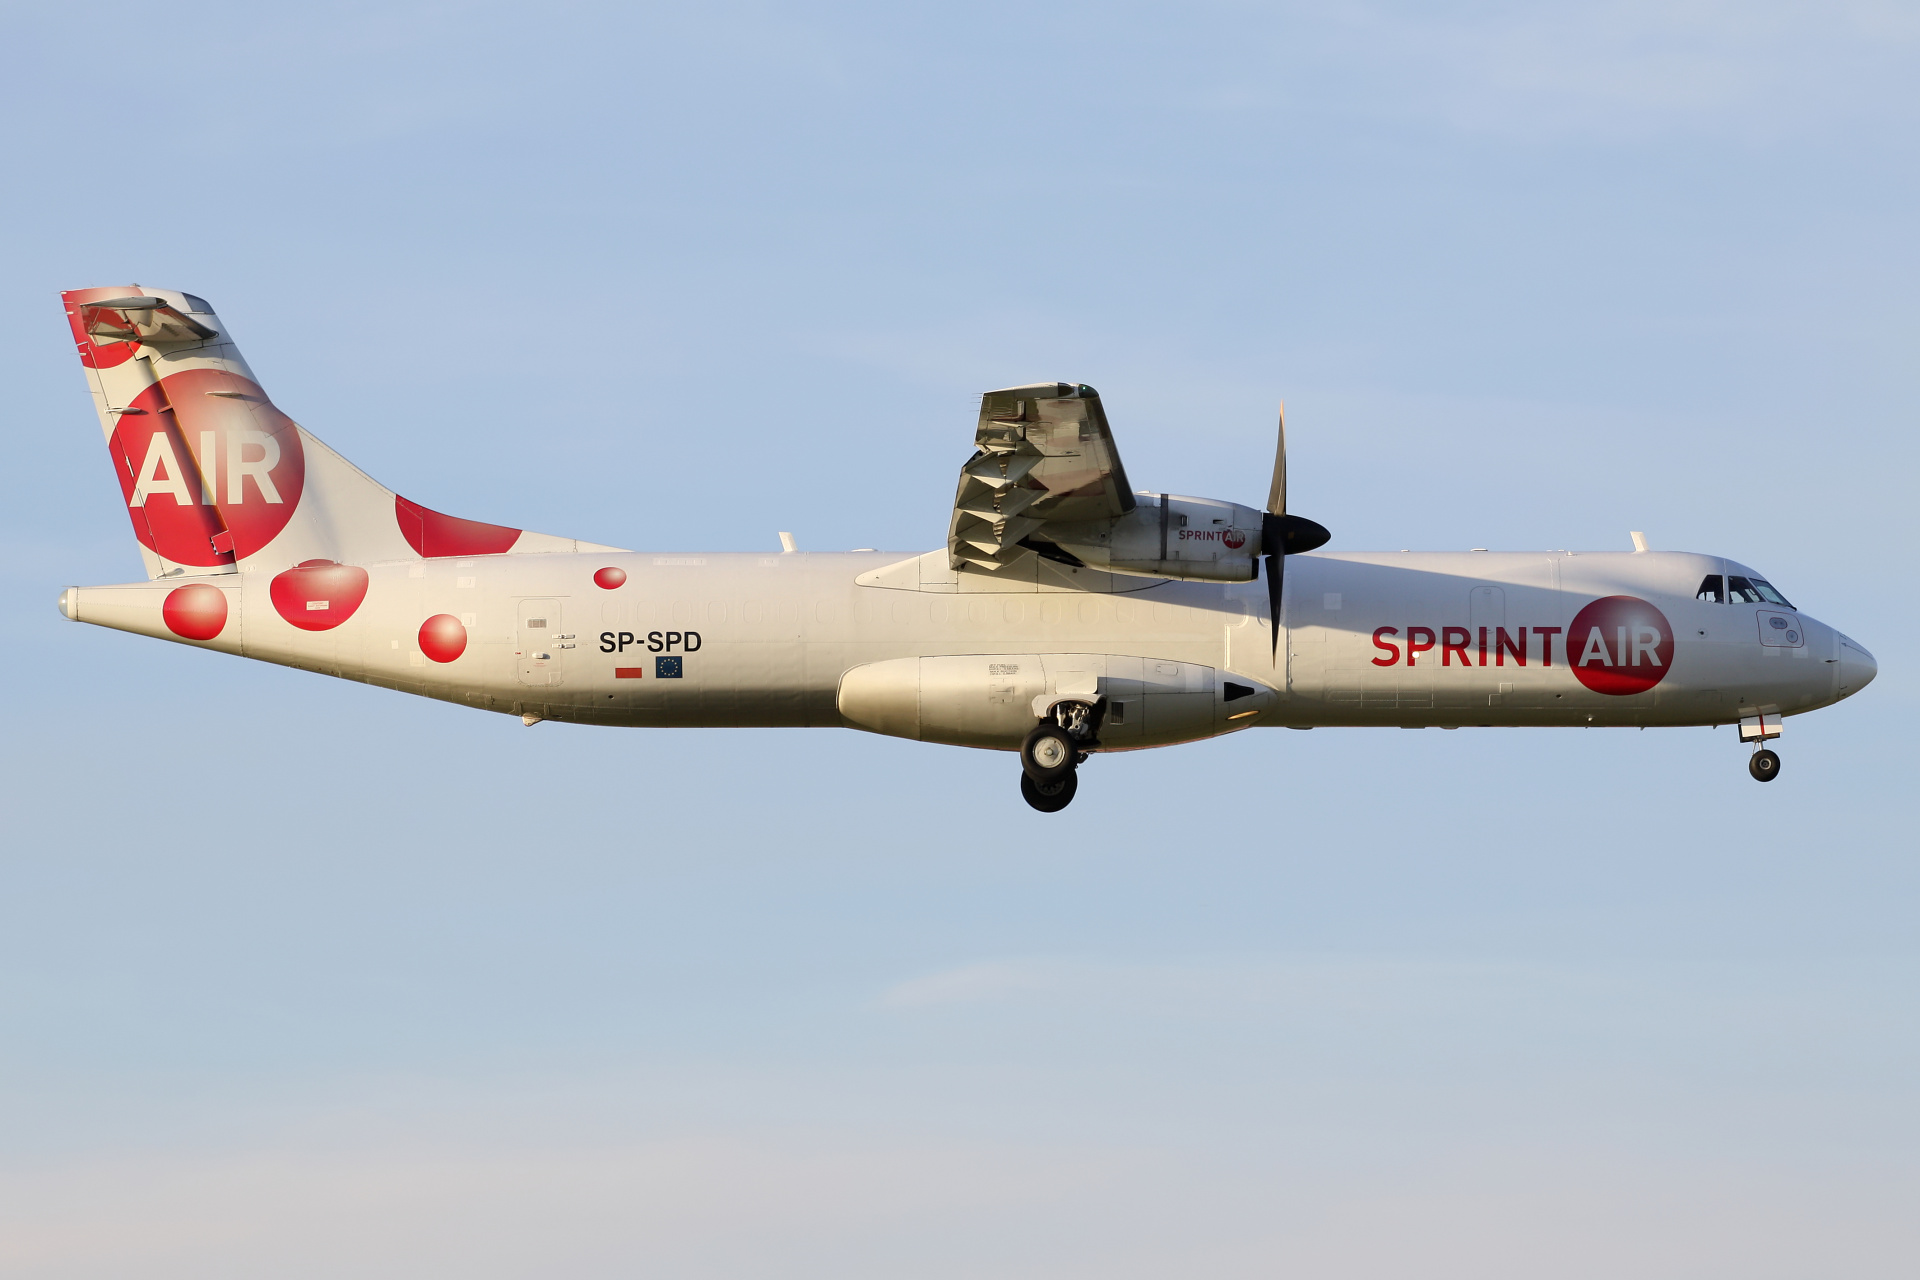 SP-SPD (Aircraft » EPWA Spotting » ATR 72 » SprintAir)